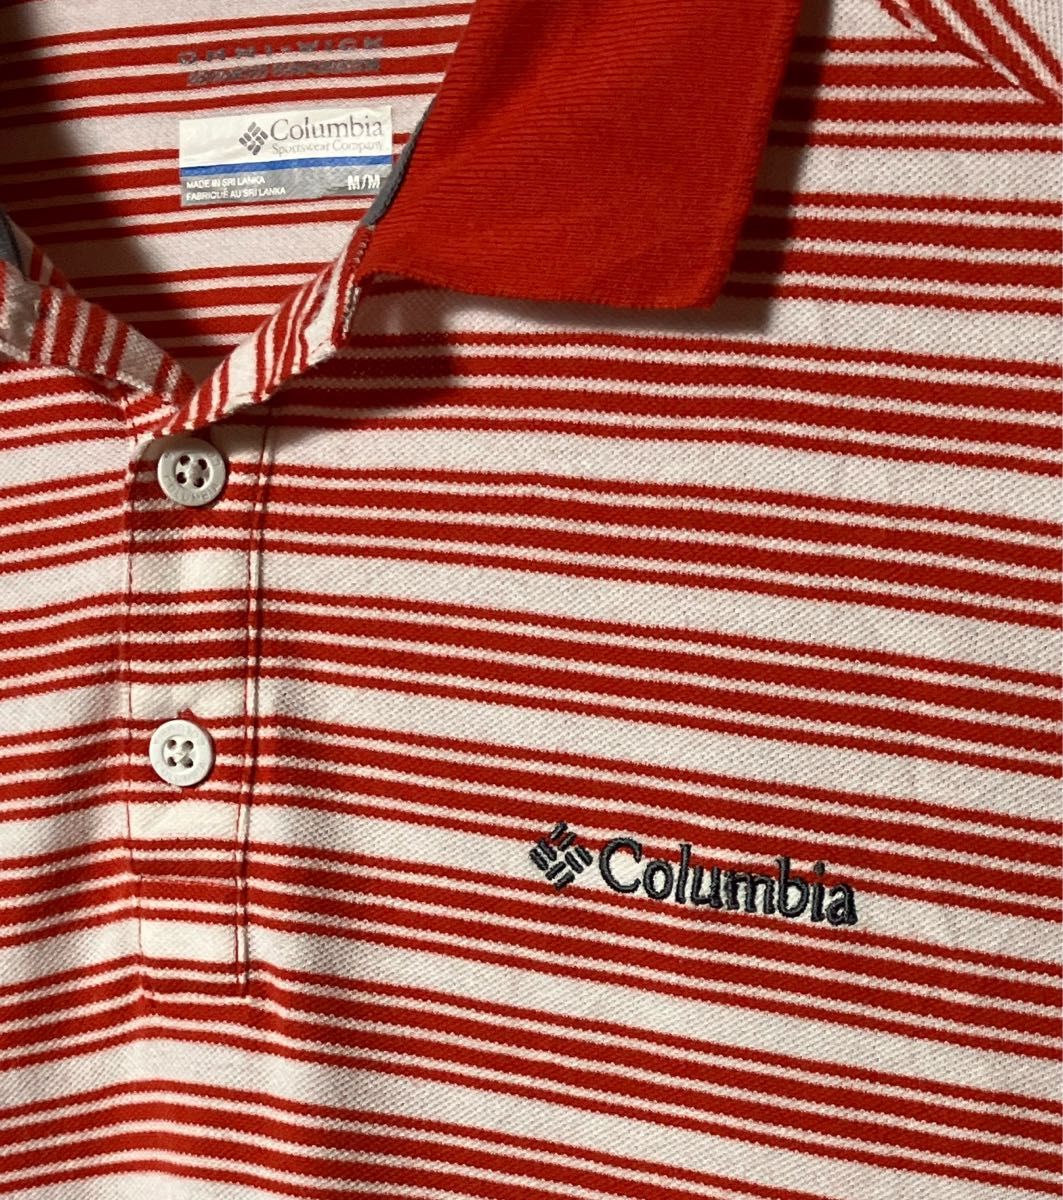 Colombia ポロシャツ カラフルボーダー Mサイズ ワンポイント刺繍ロゴ ビンテージ コロンビア 赤白ボーダー カワイイ